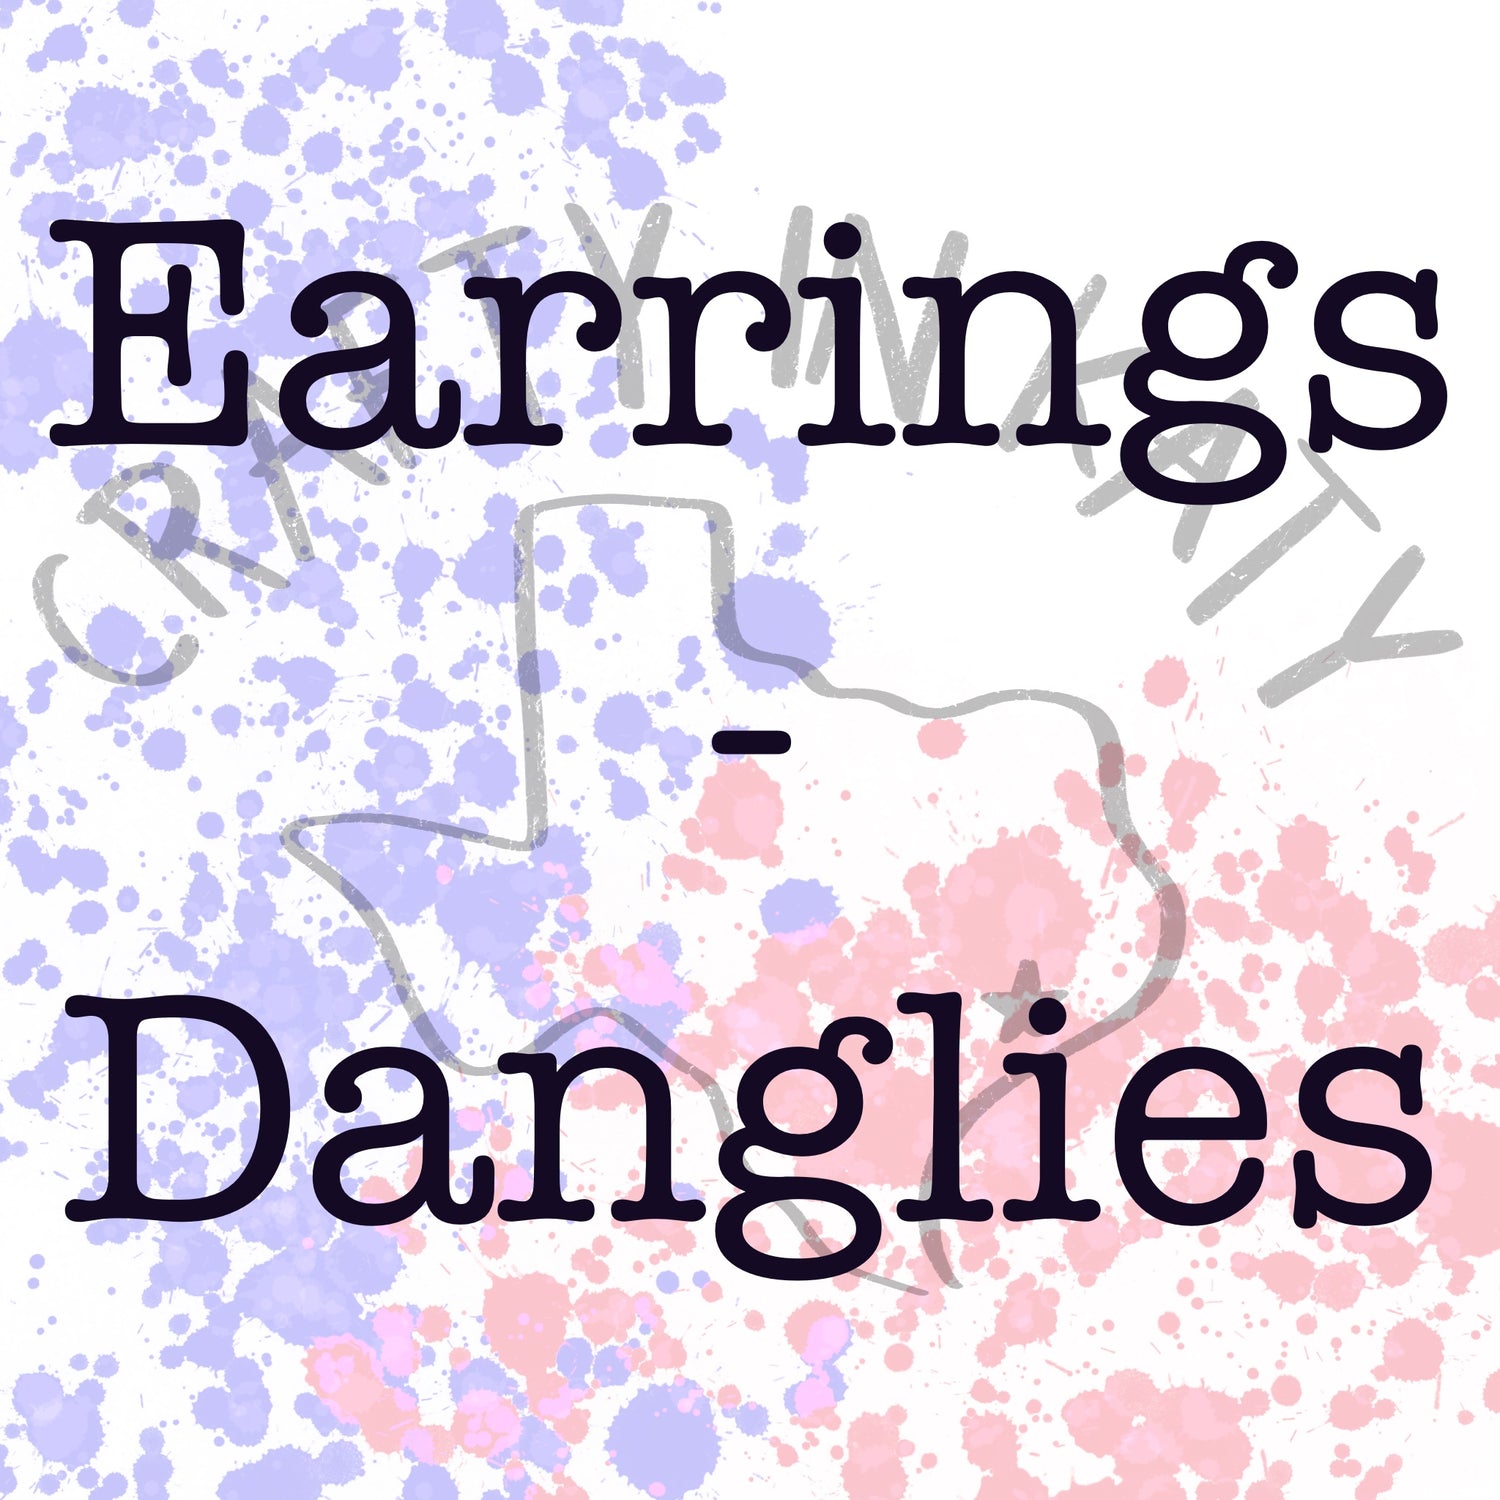 Earrings - Danglies